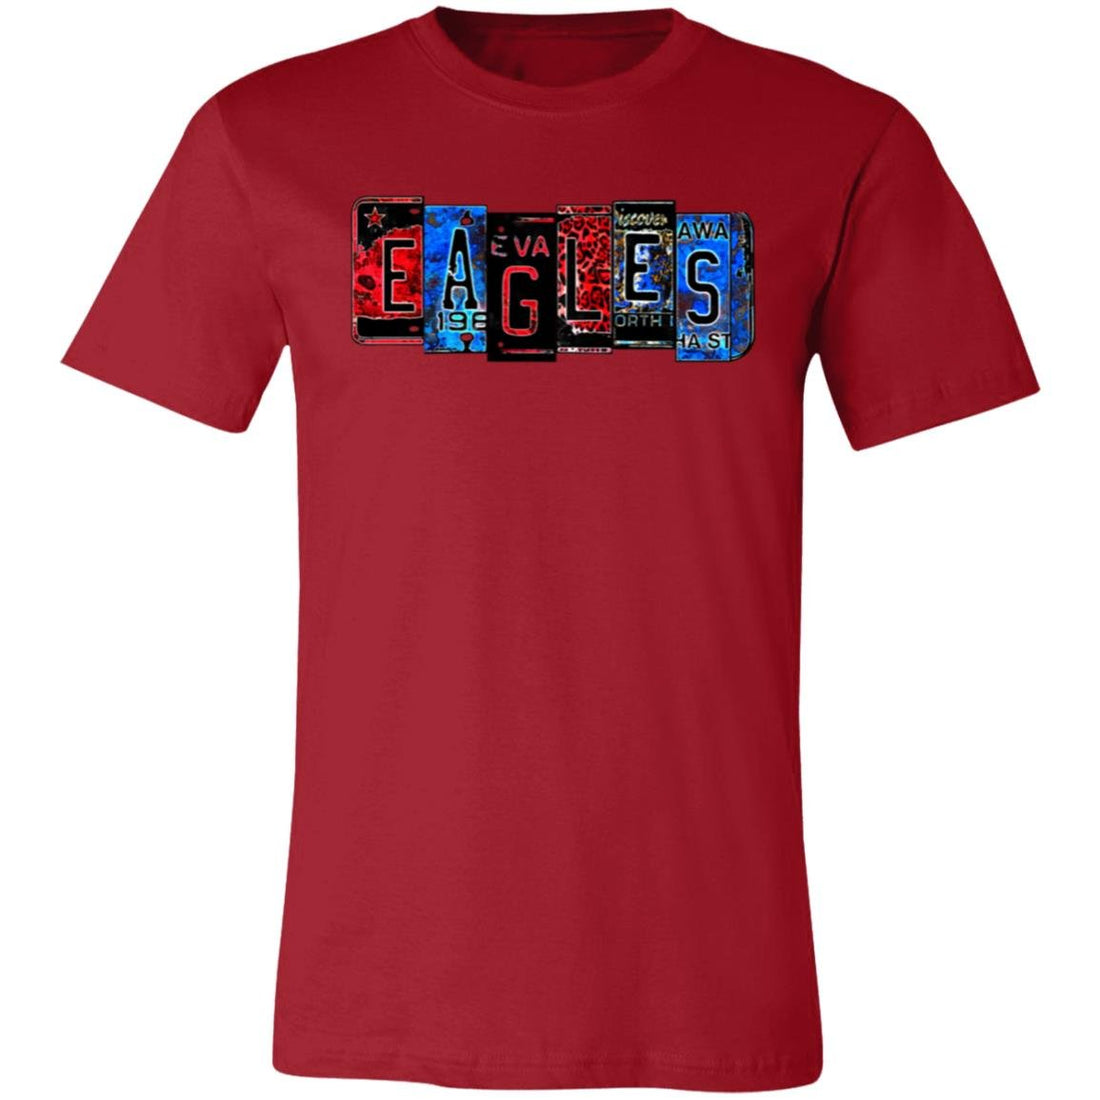 Eagles Plates Short-Sleeve T-Shirt - T-Shirts - Positively Sassy - Eagles Plates Short-Sleeve T-Shirt